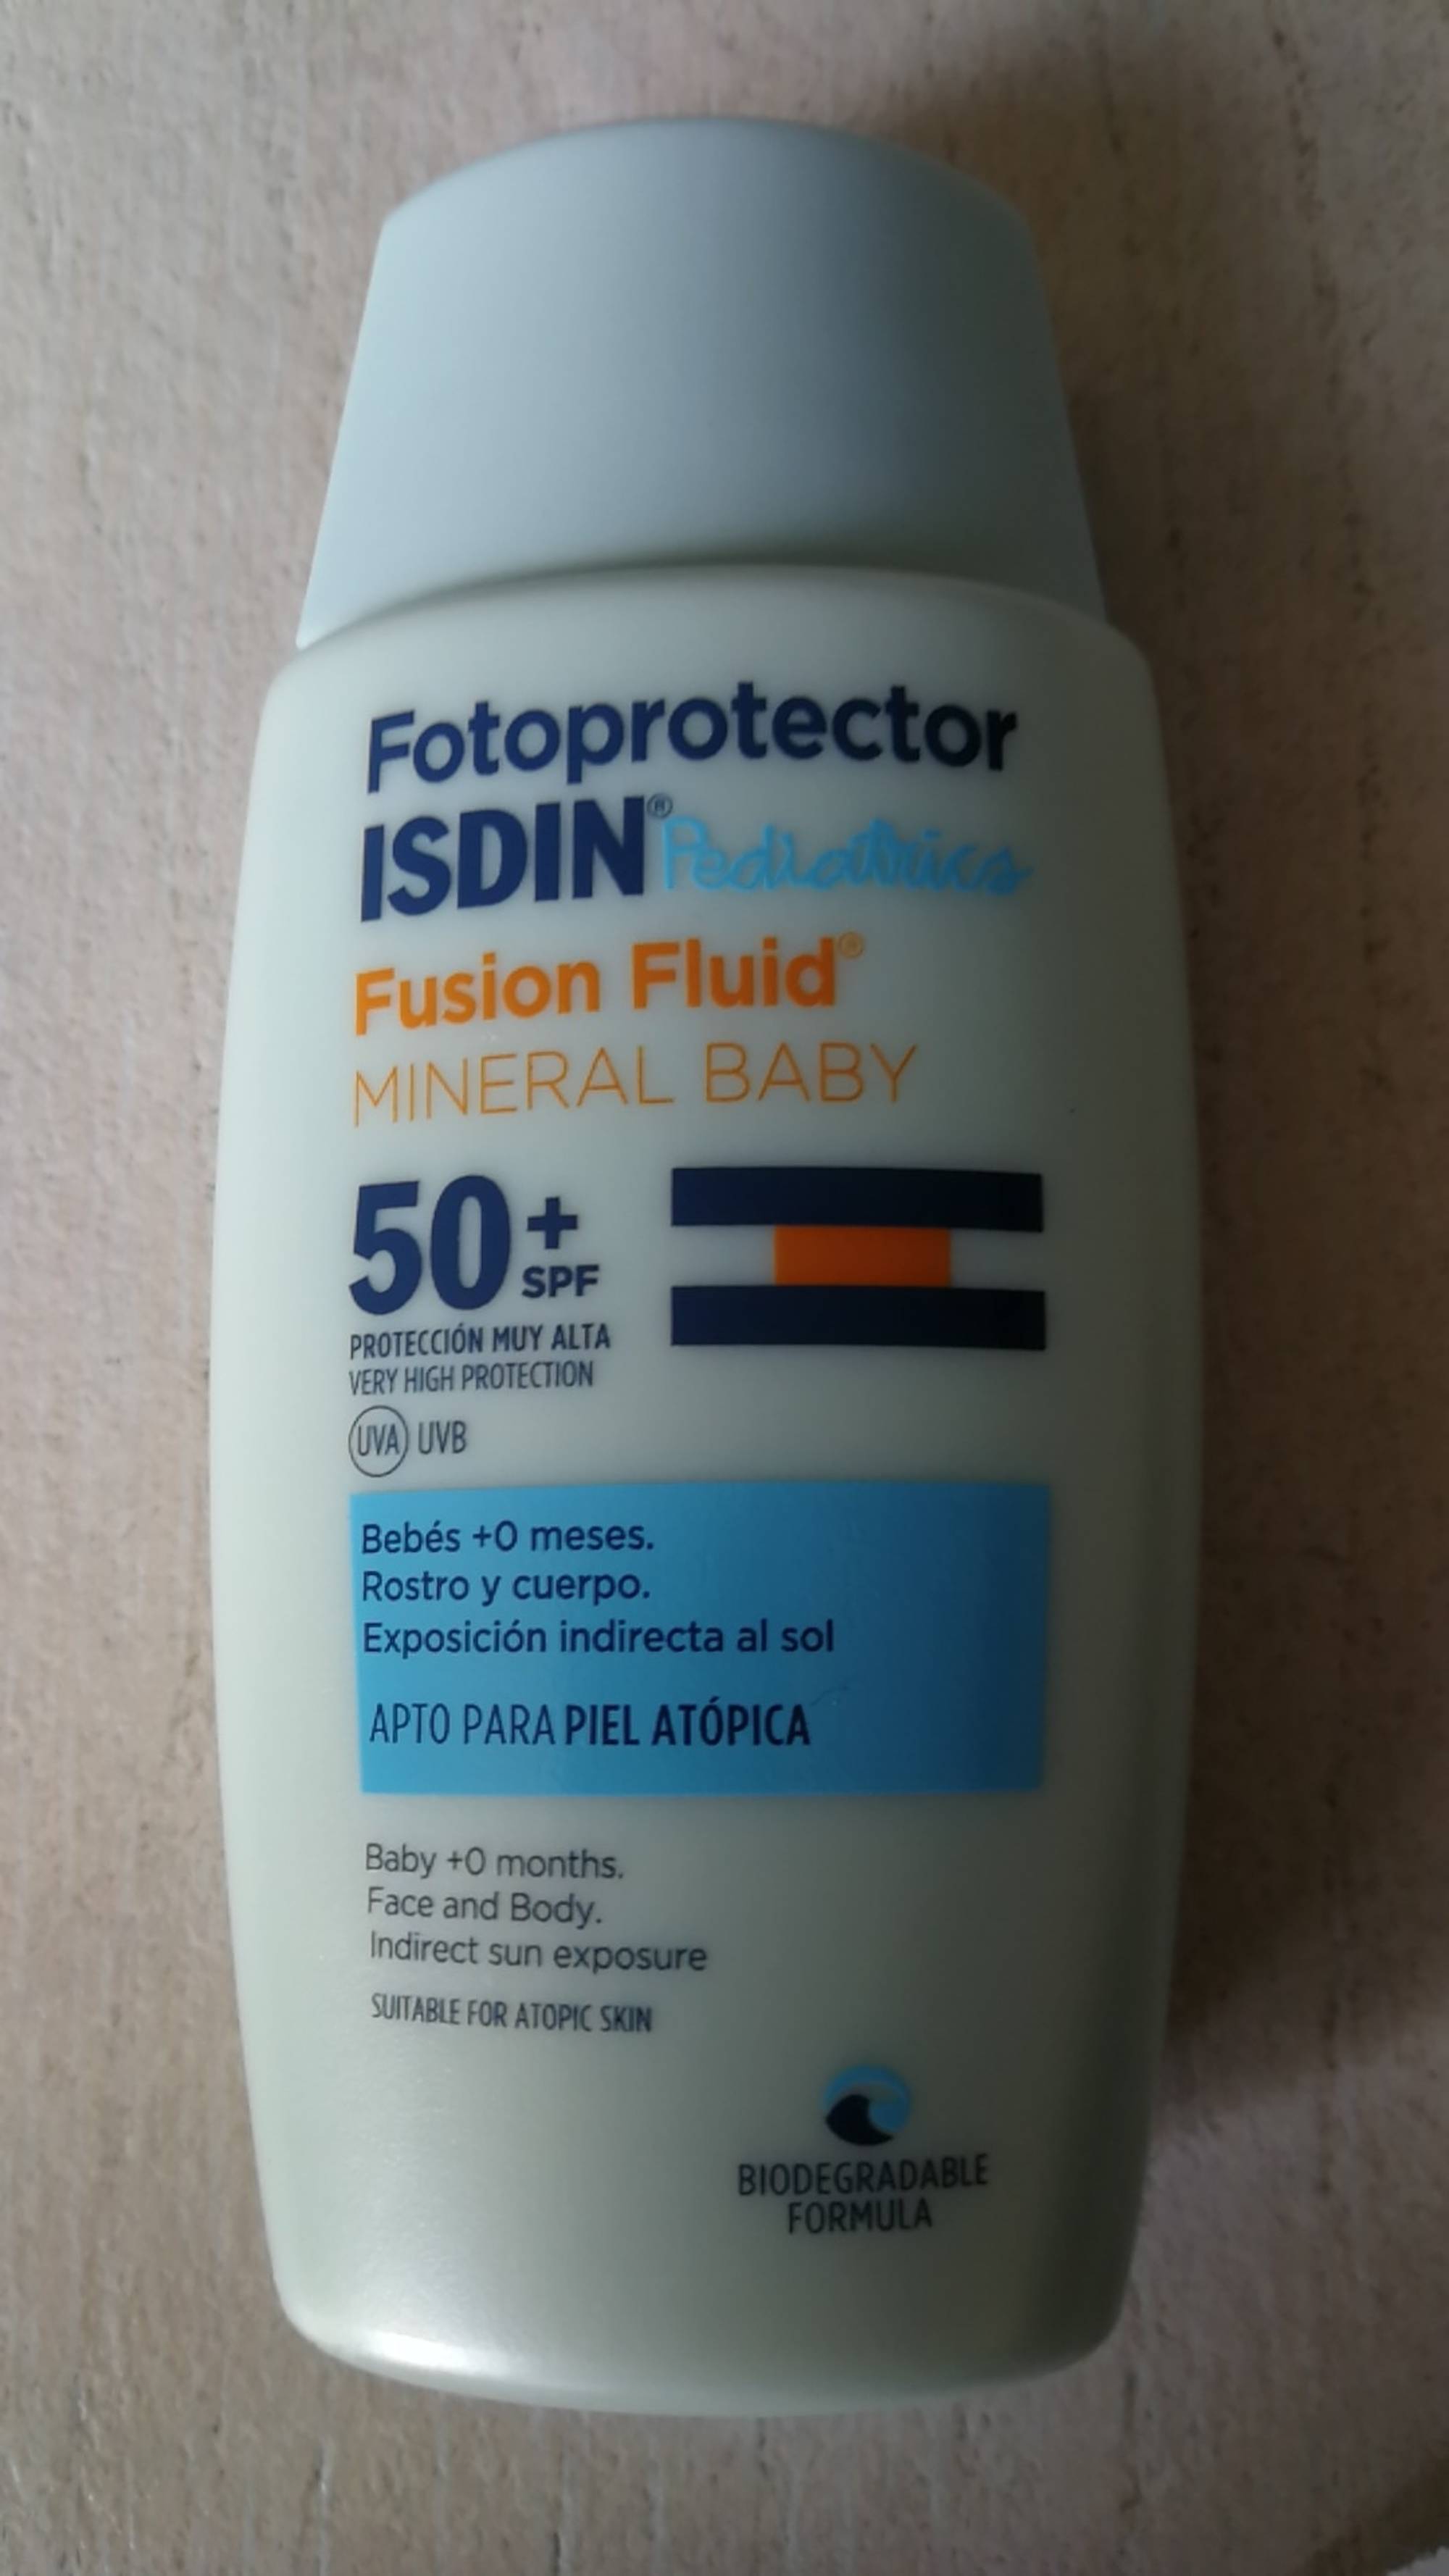 ISDIN - Fotoprotector pediatrics - Fusion fluid mineral baby SPF 50+